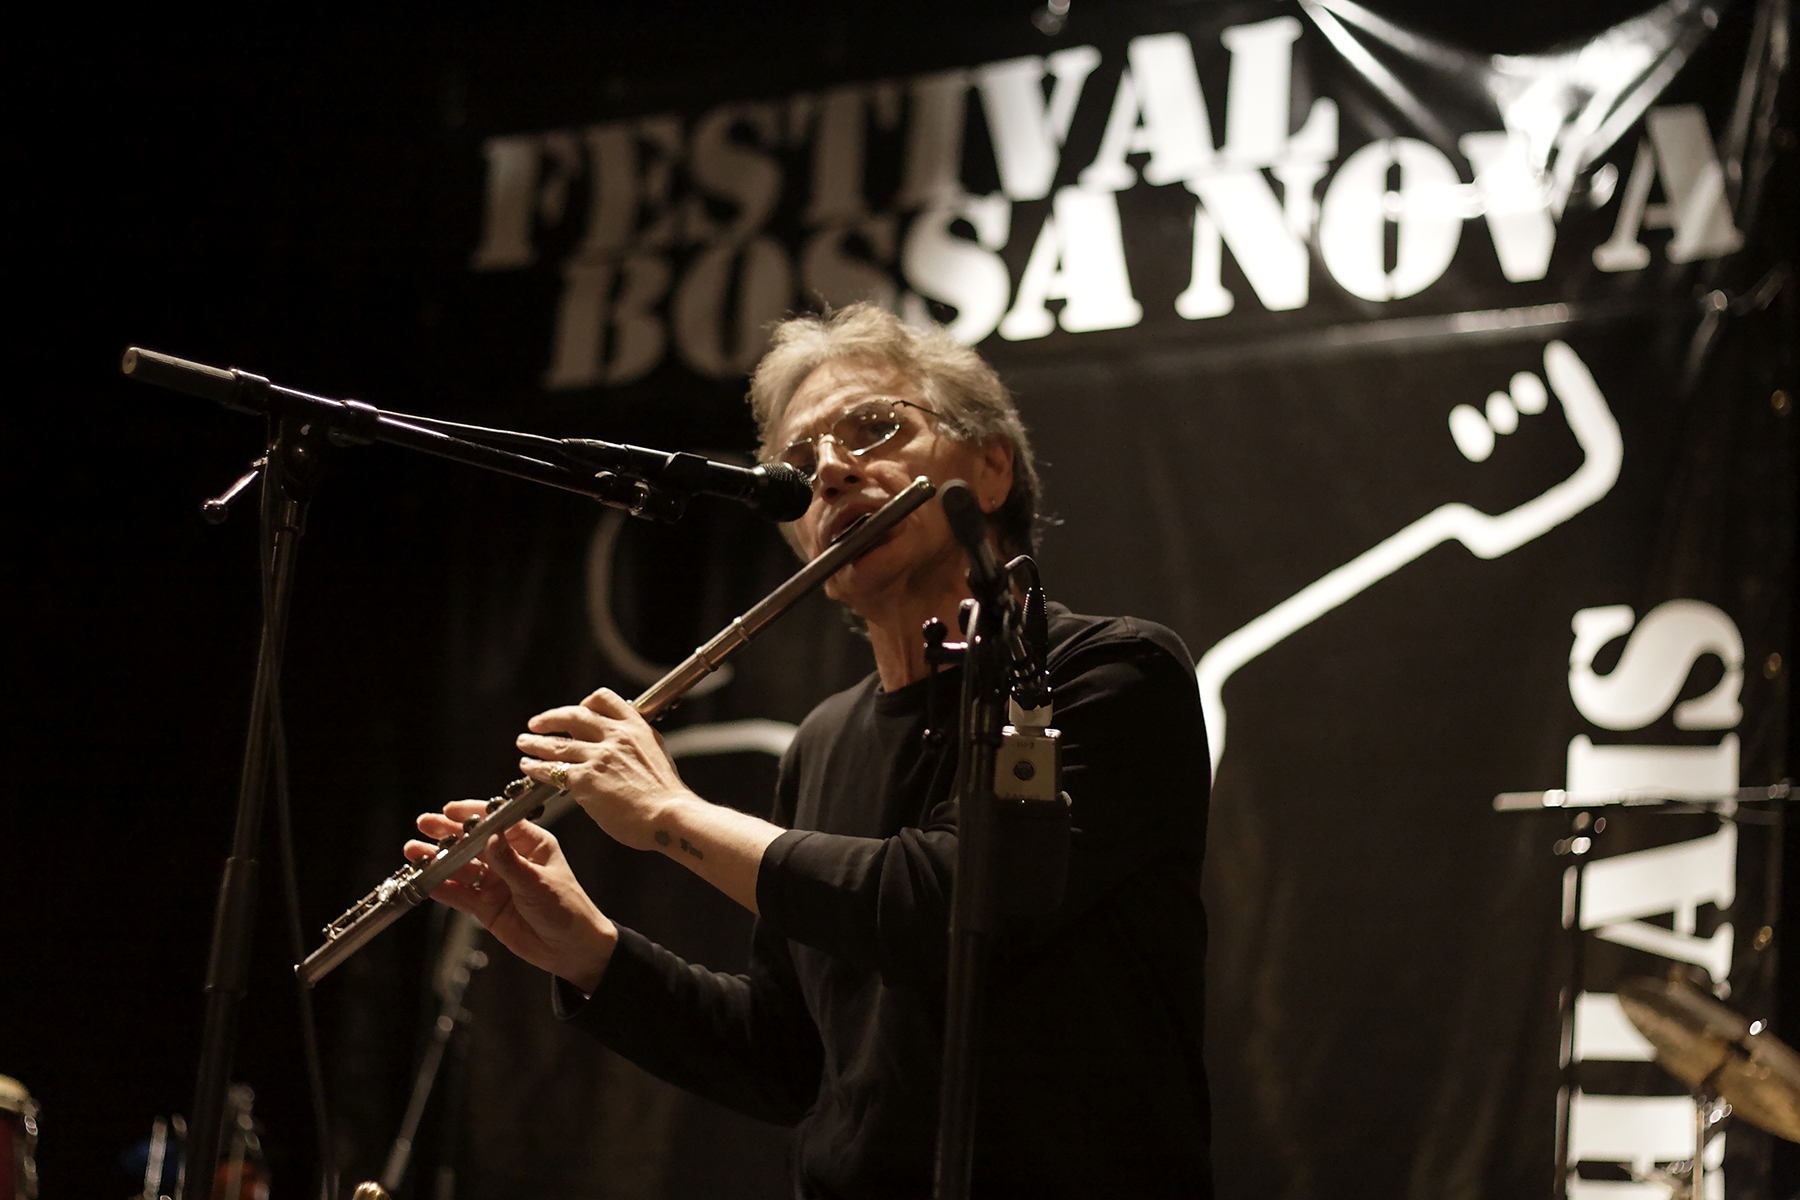 Raul Mascarenhas : Flute traversière, Saxophone